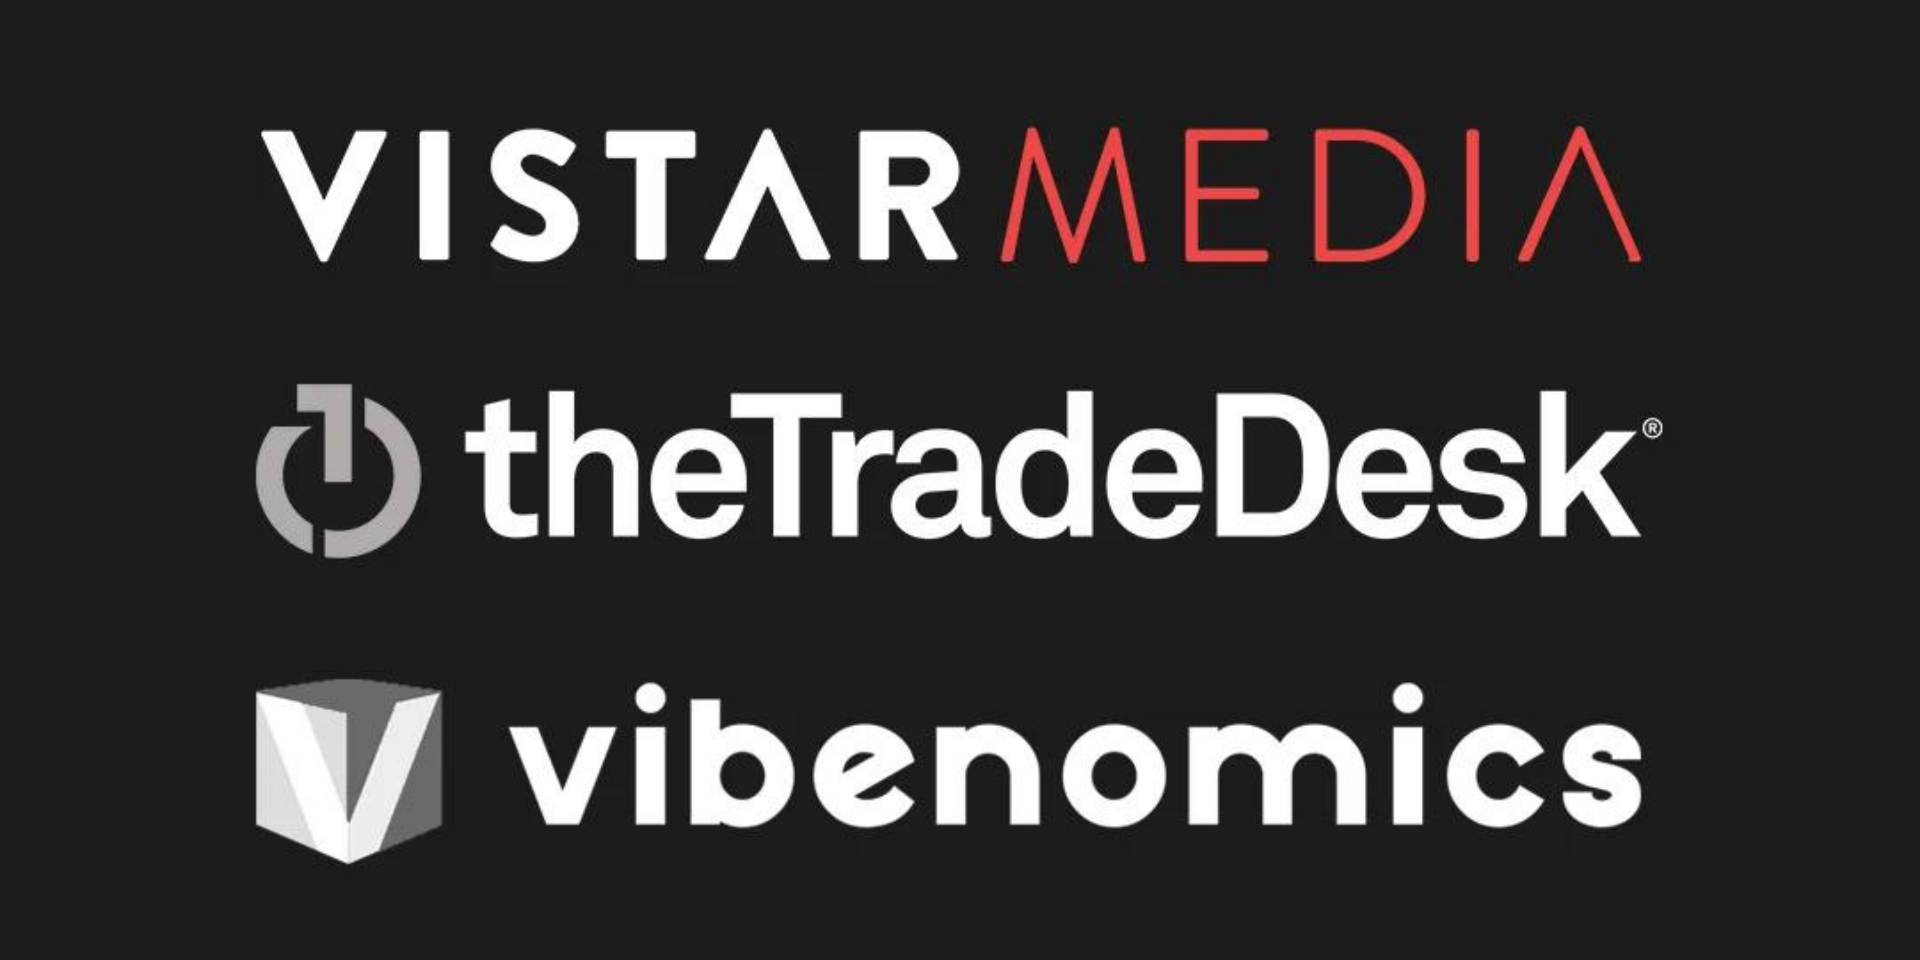 vibenomics and tradedesk partner with vistar media